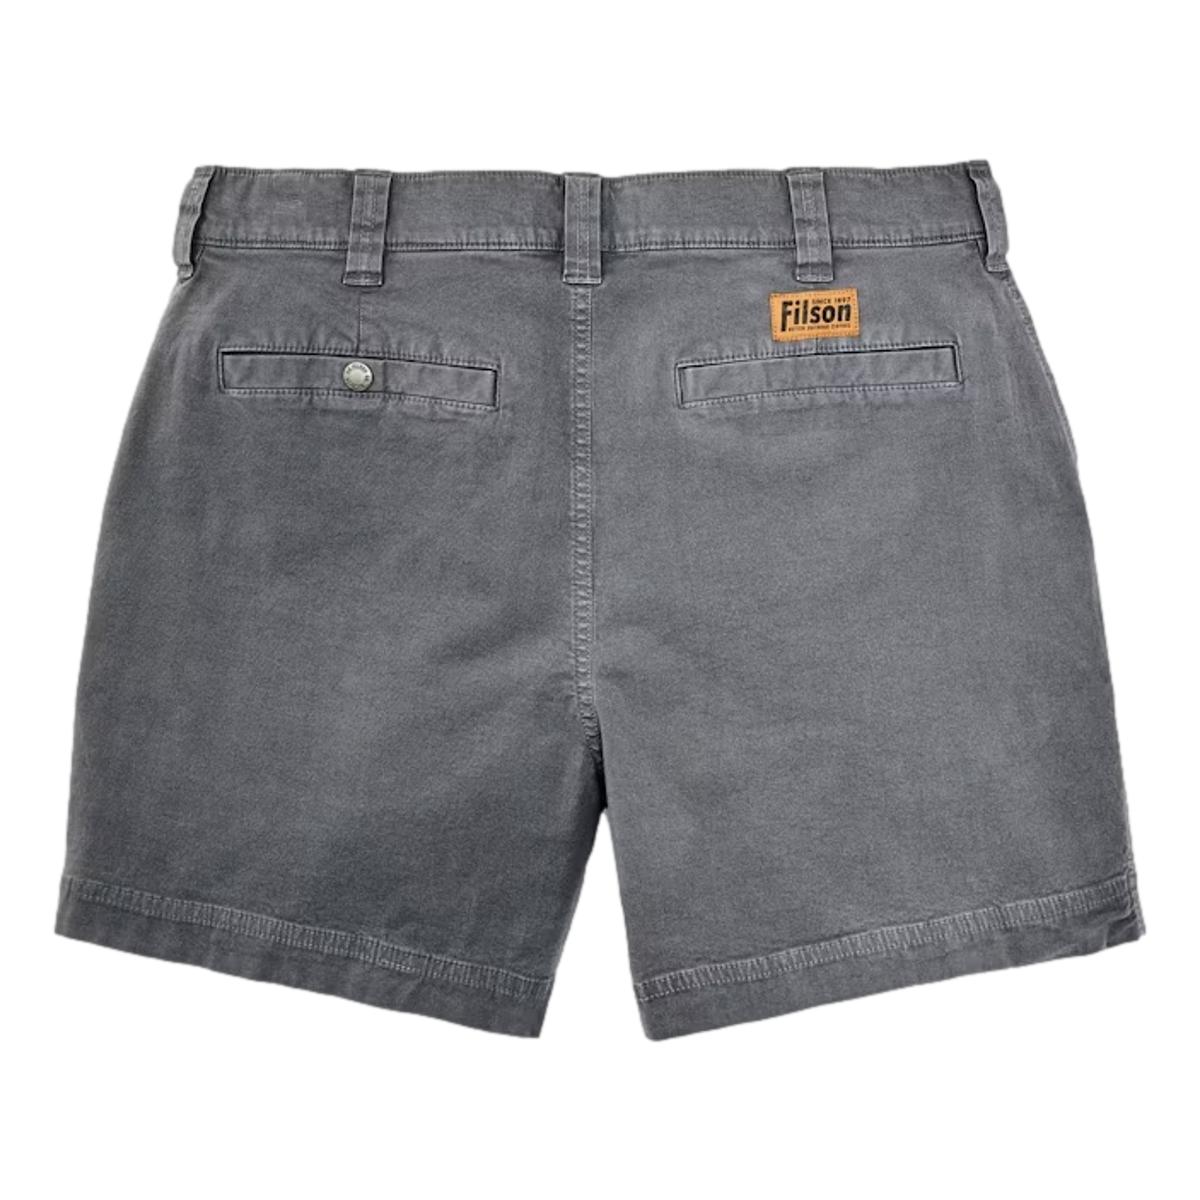 Granite Mountain 6’ Shorts Rockslide Gray - Shorts